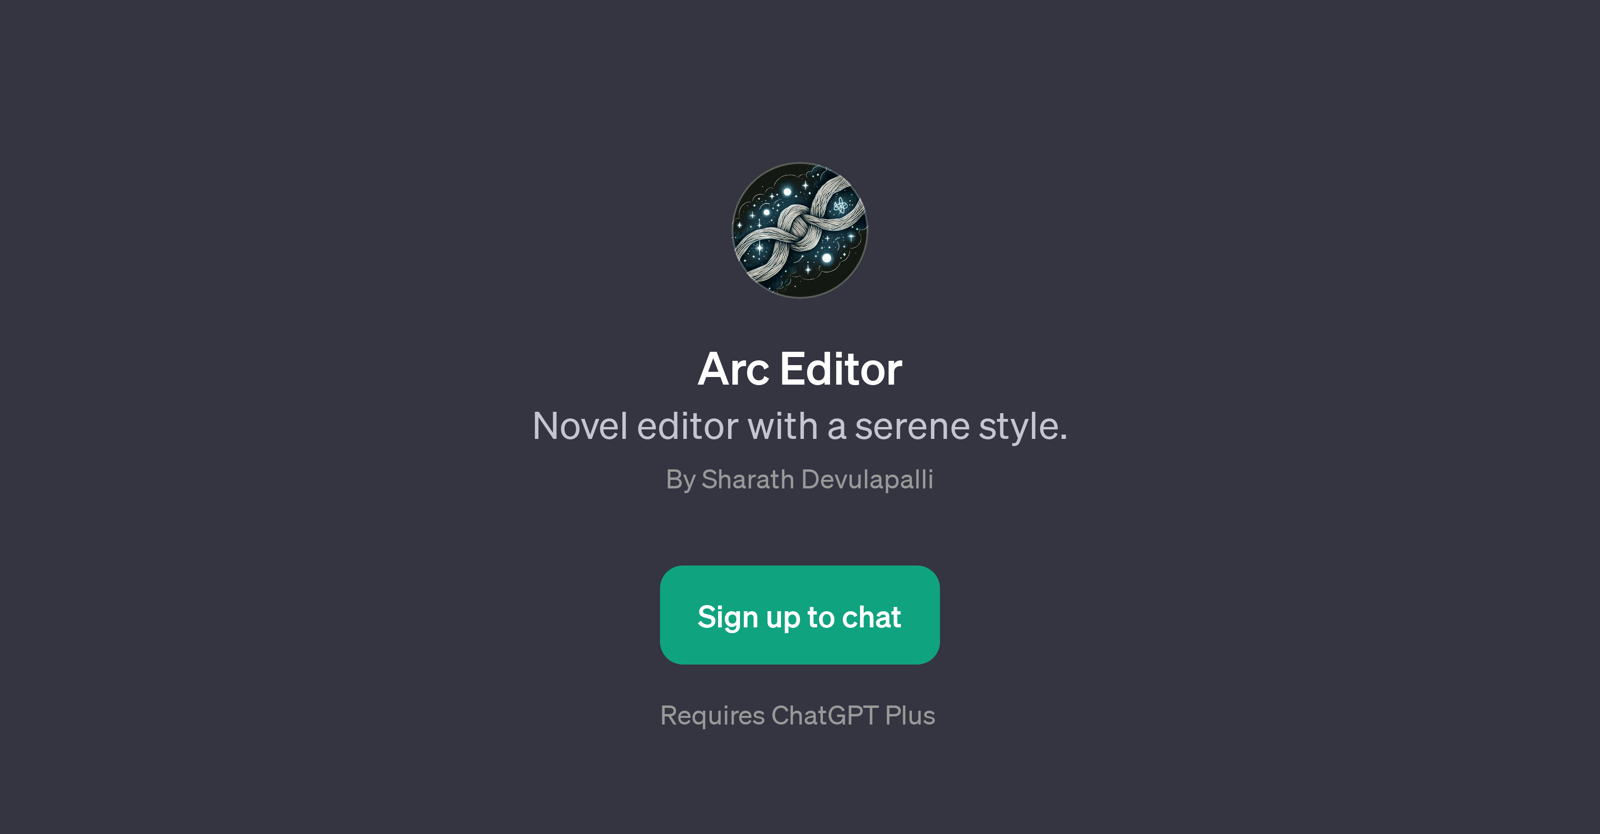 Arc Editor website